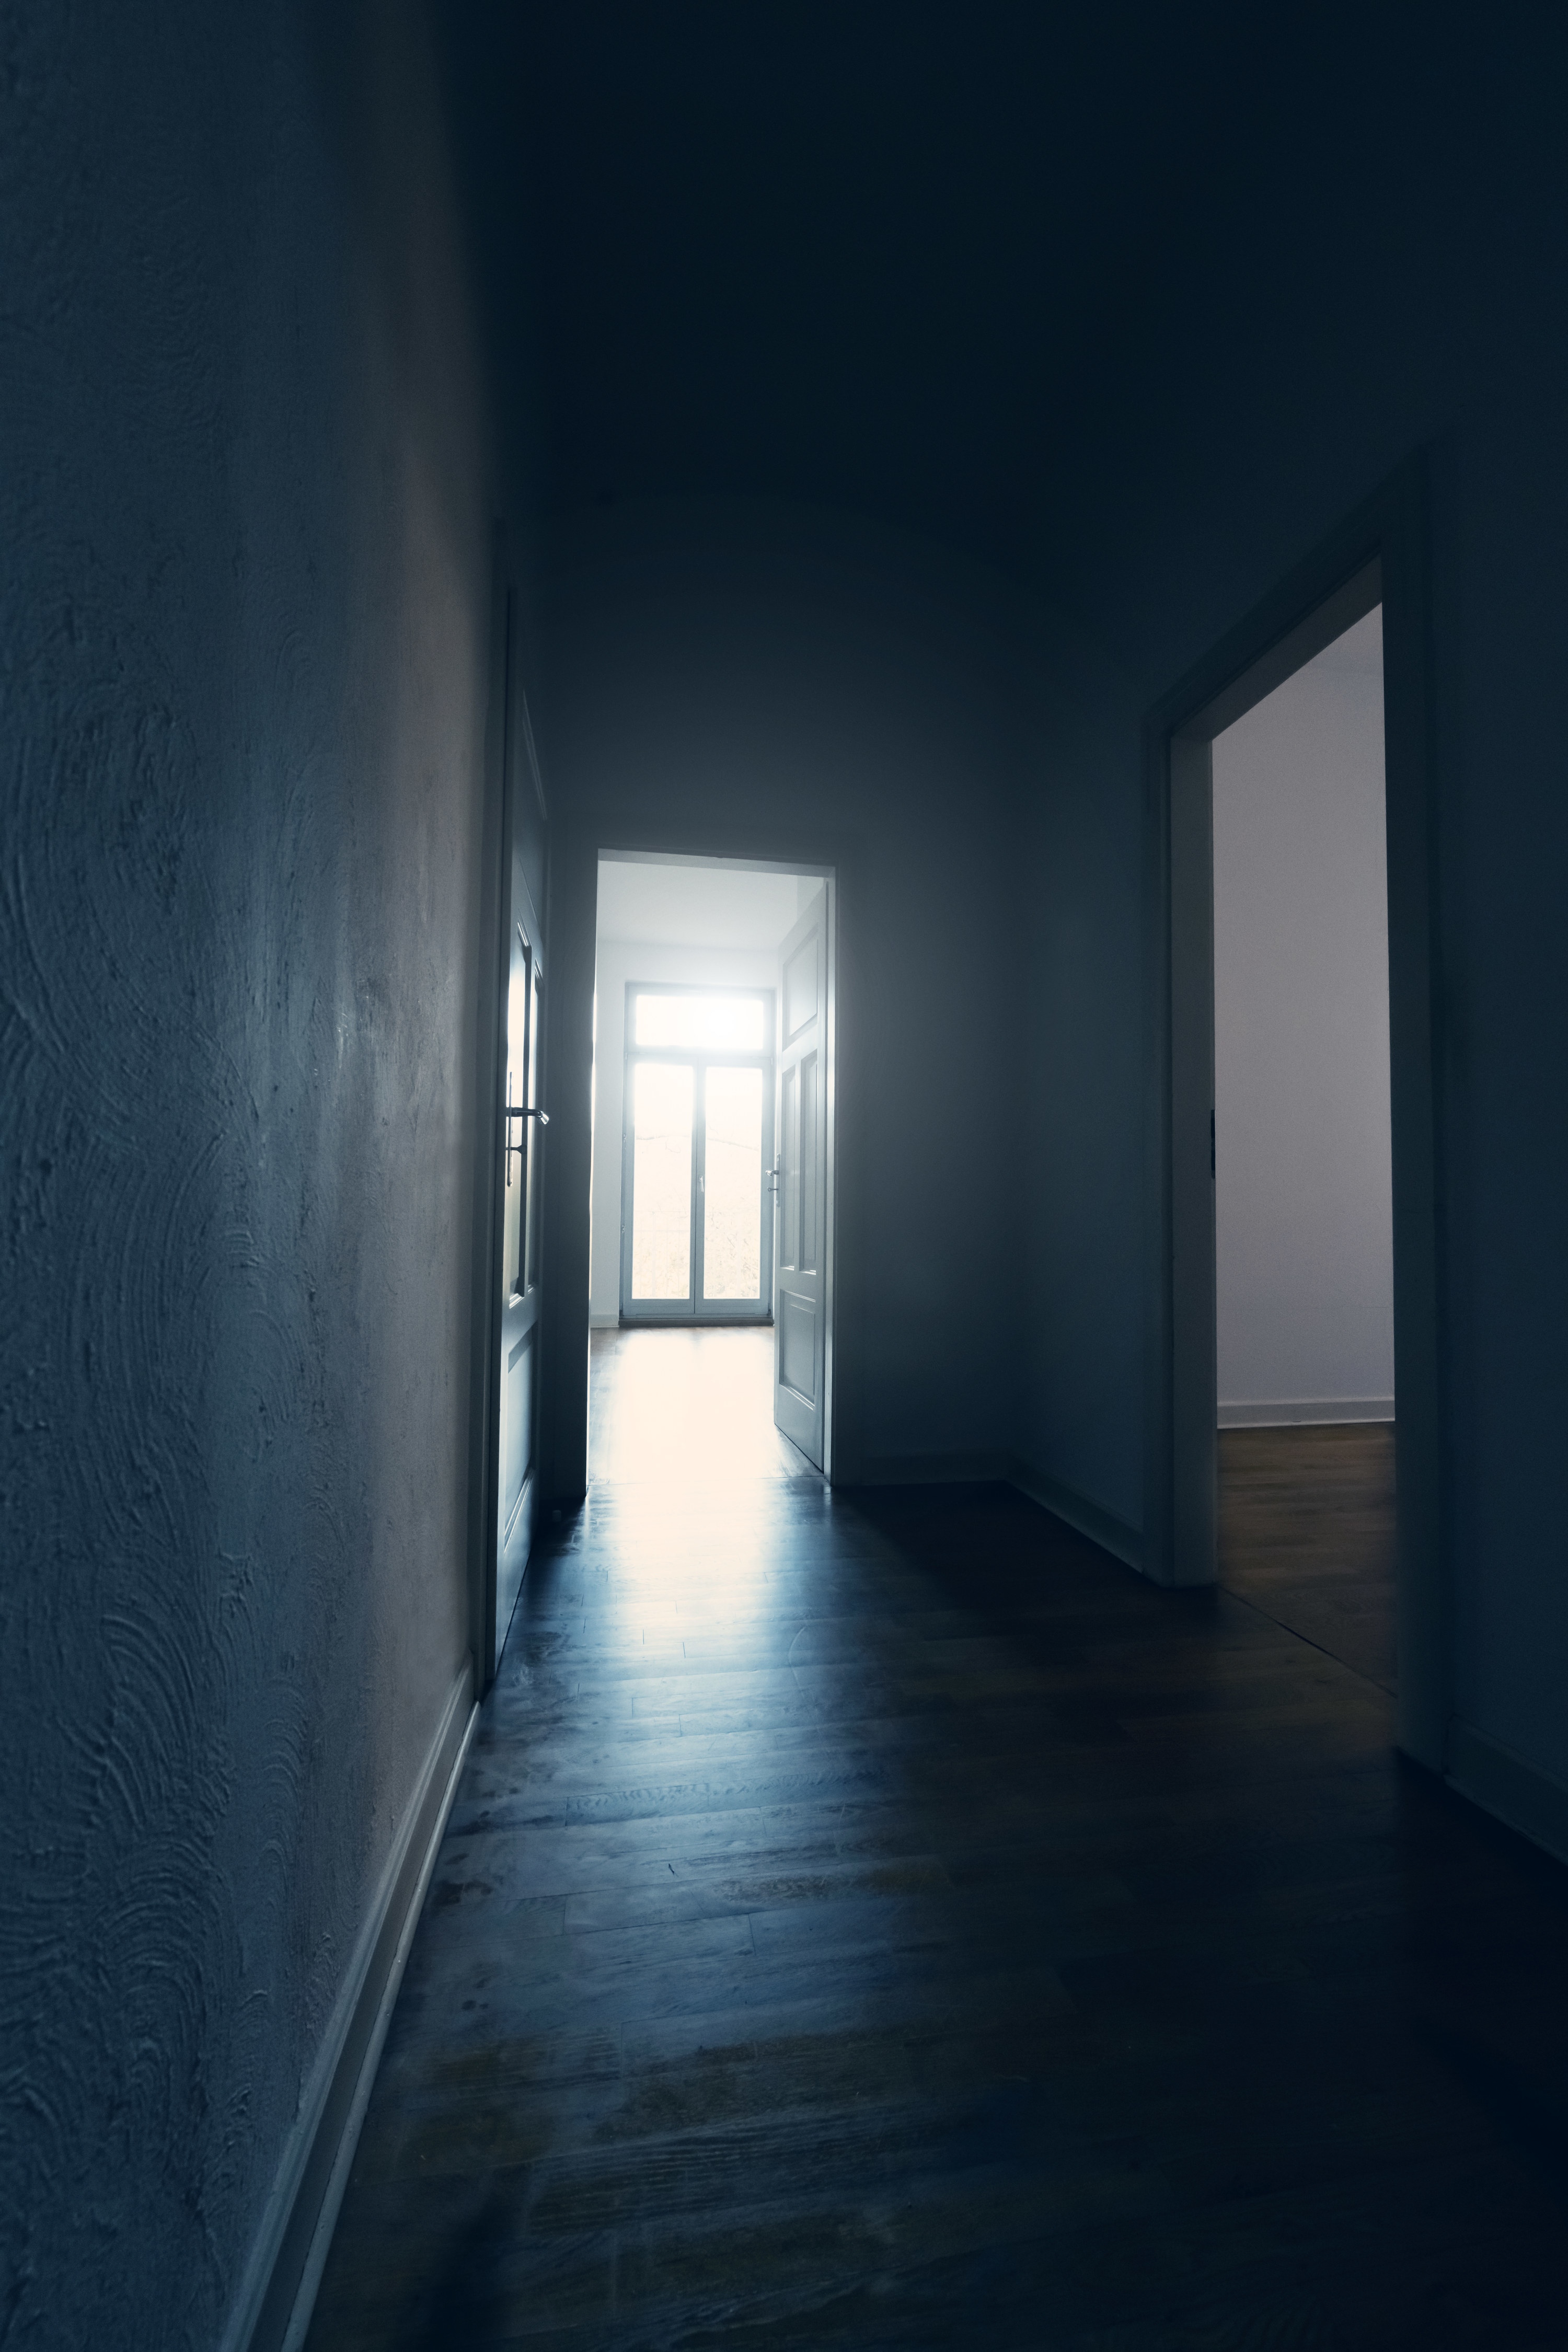 A dark hallway